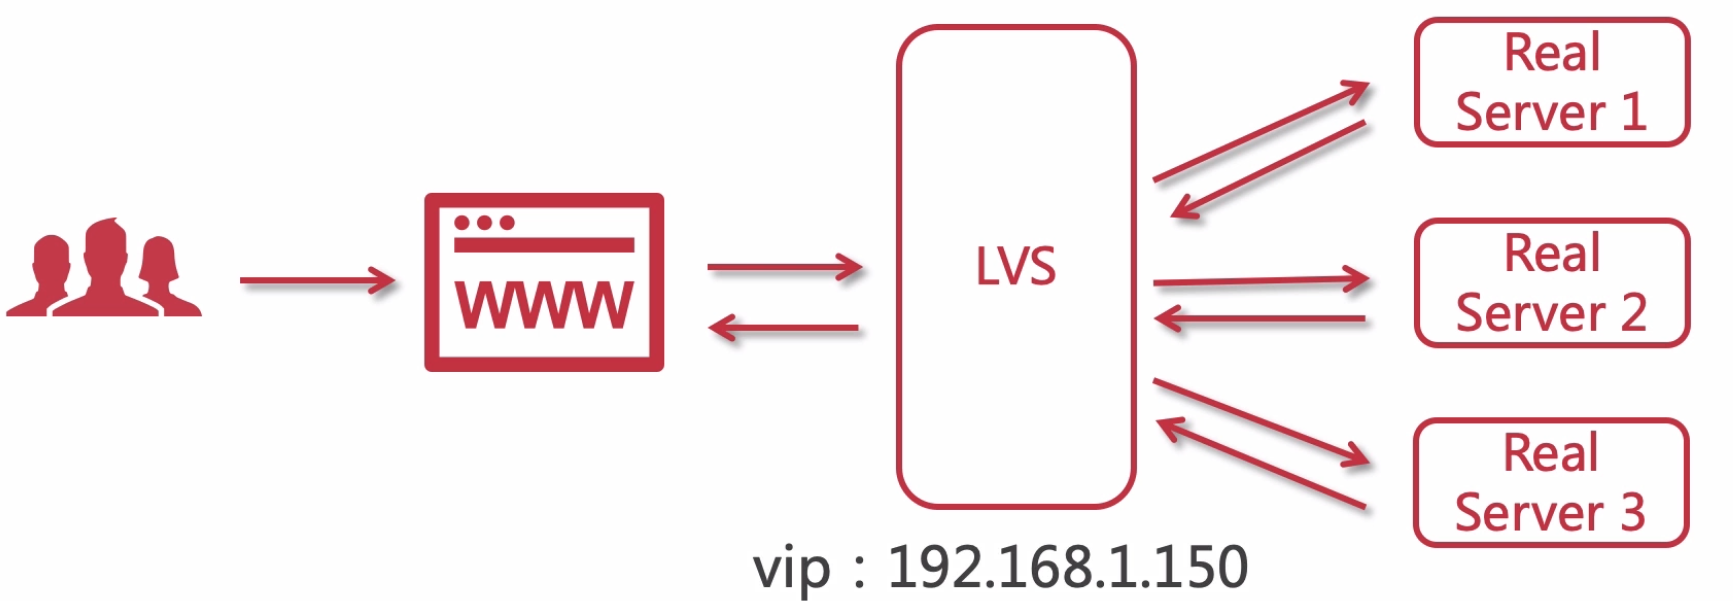 26-LVS 三种模式_服务器